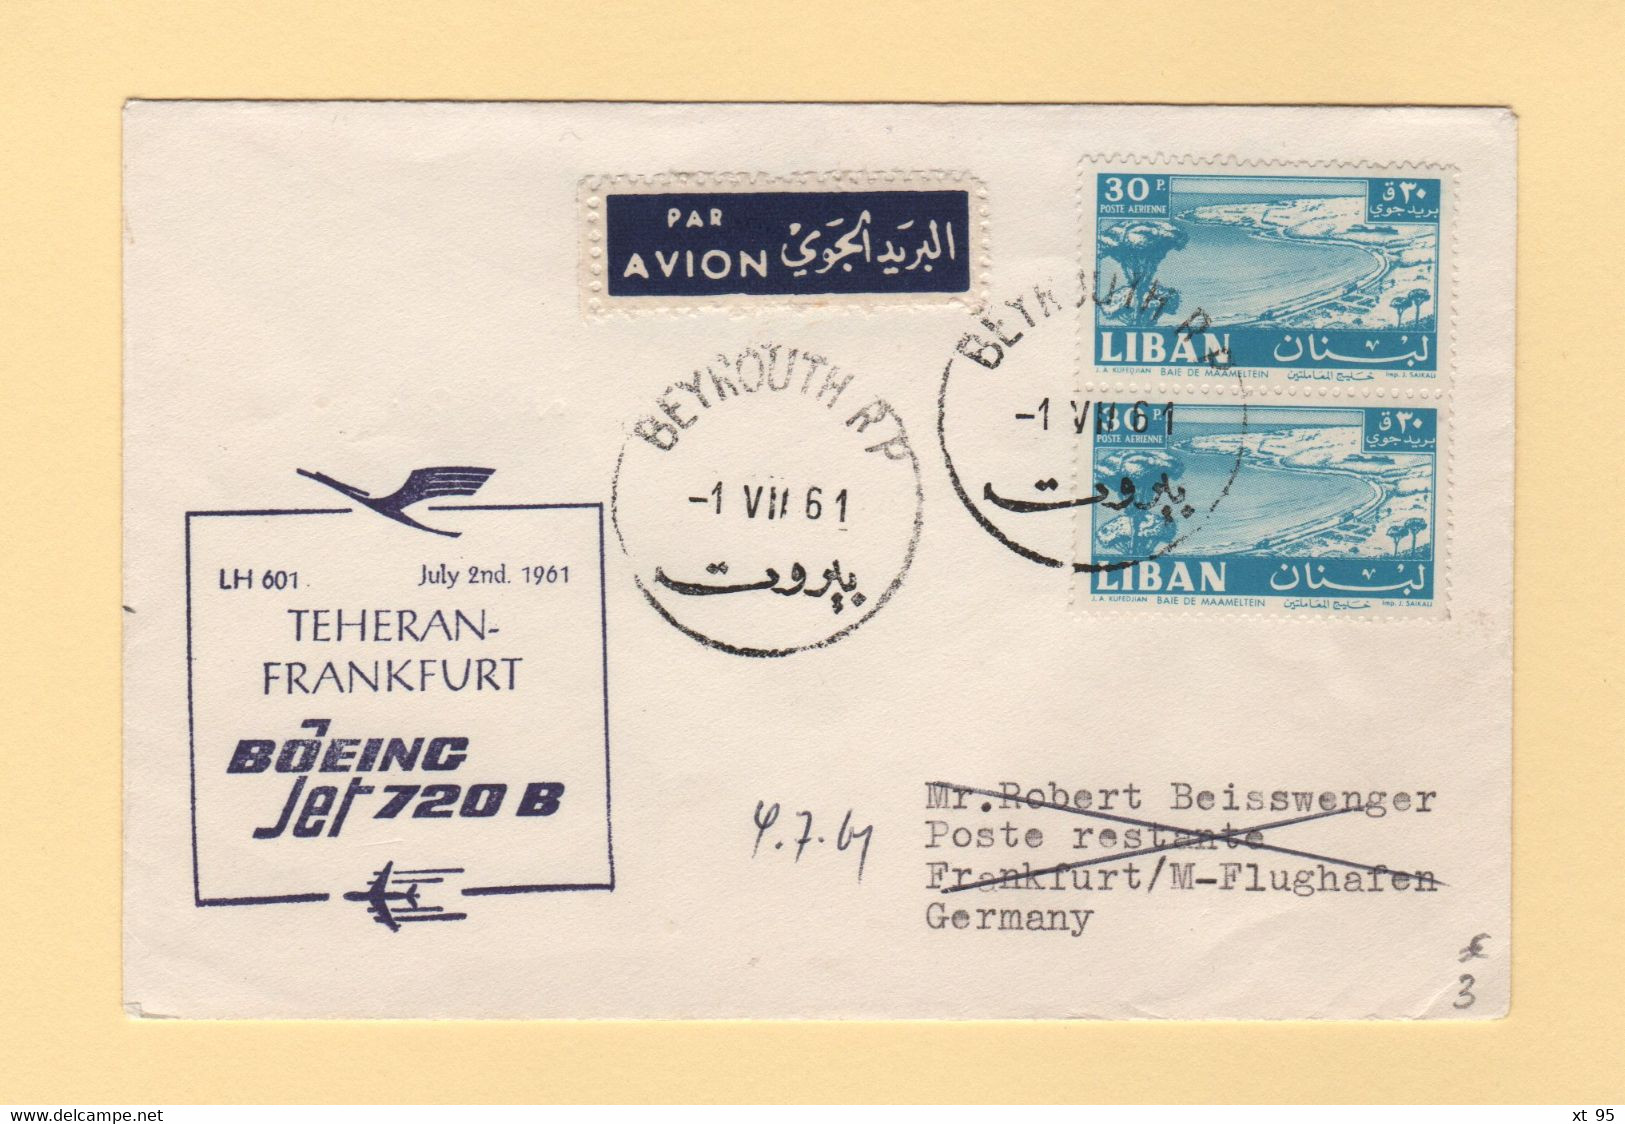 1er Vol - 1961 - Teheran Frankfurt - Boeing - Liban